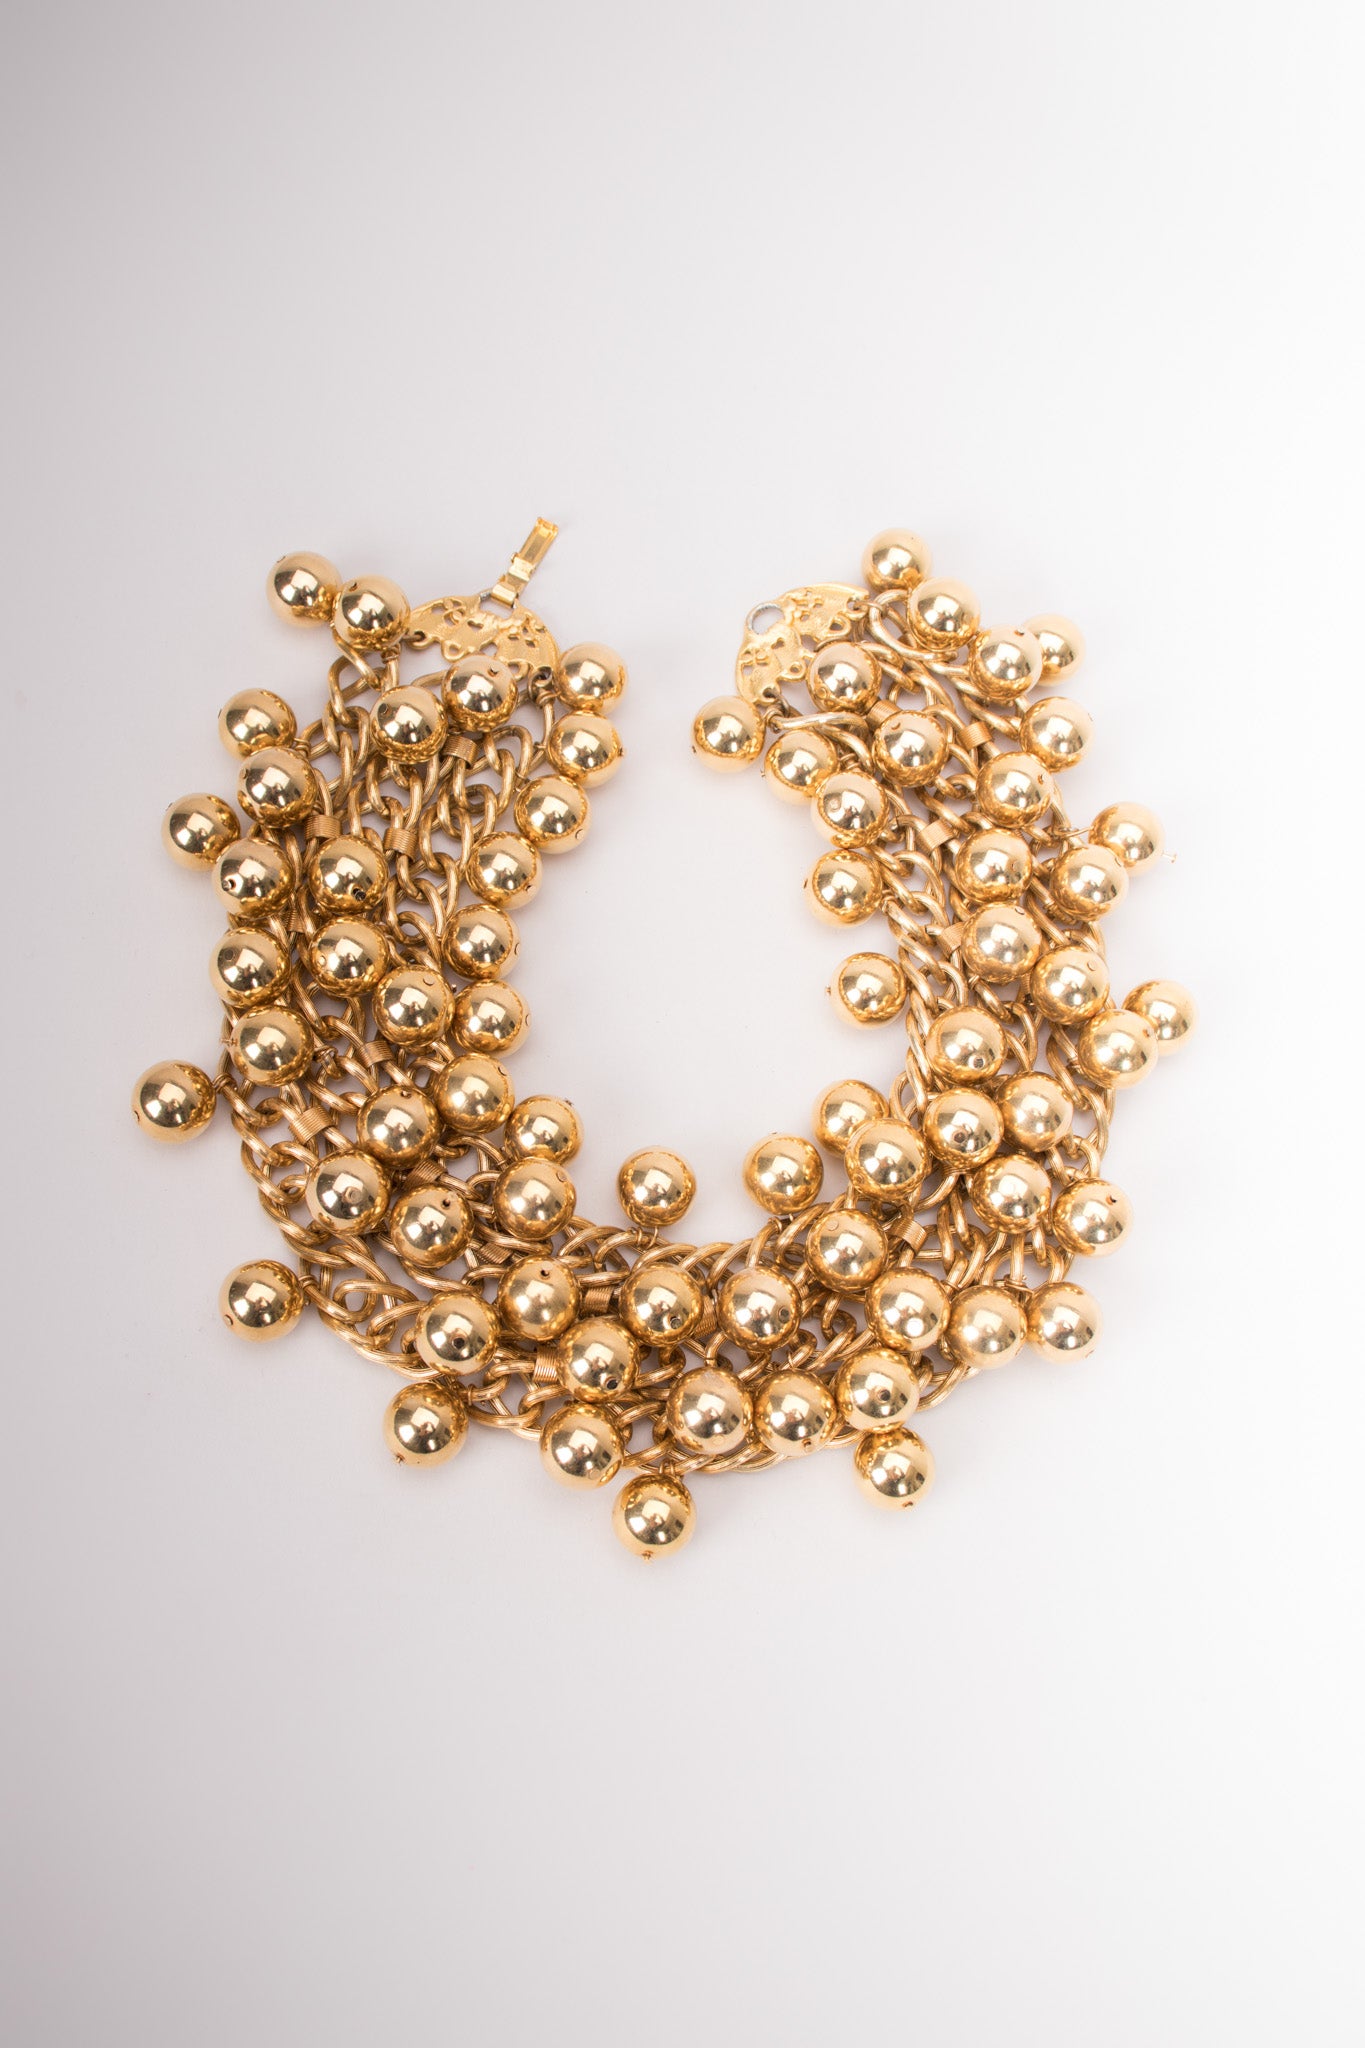 Prince Kamy Yar Shiny Gold Ball Collar Necklace